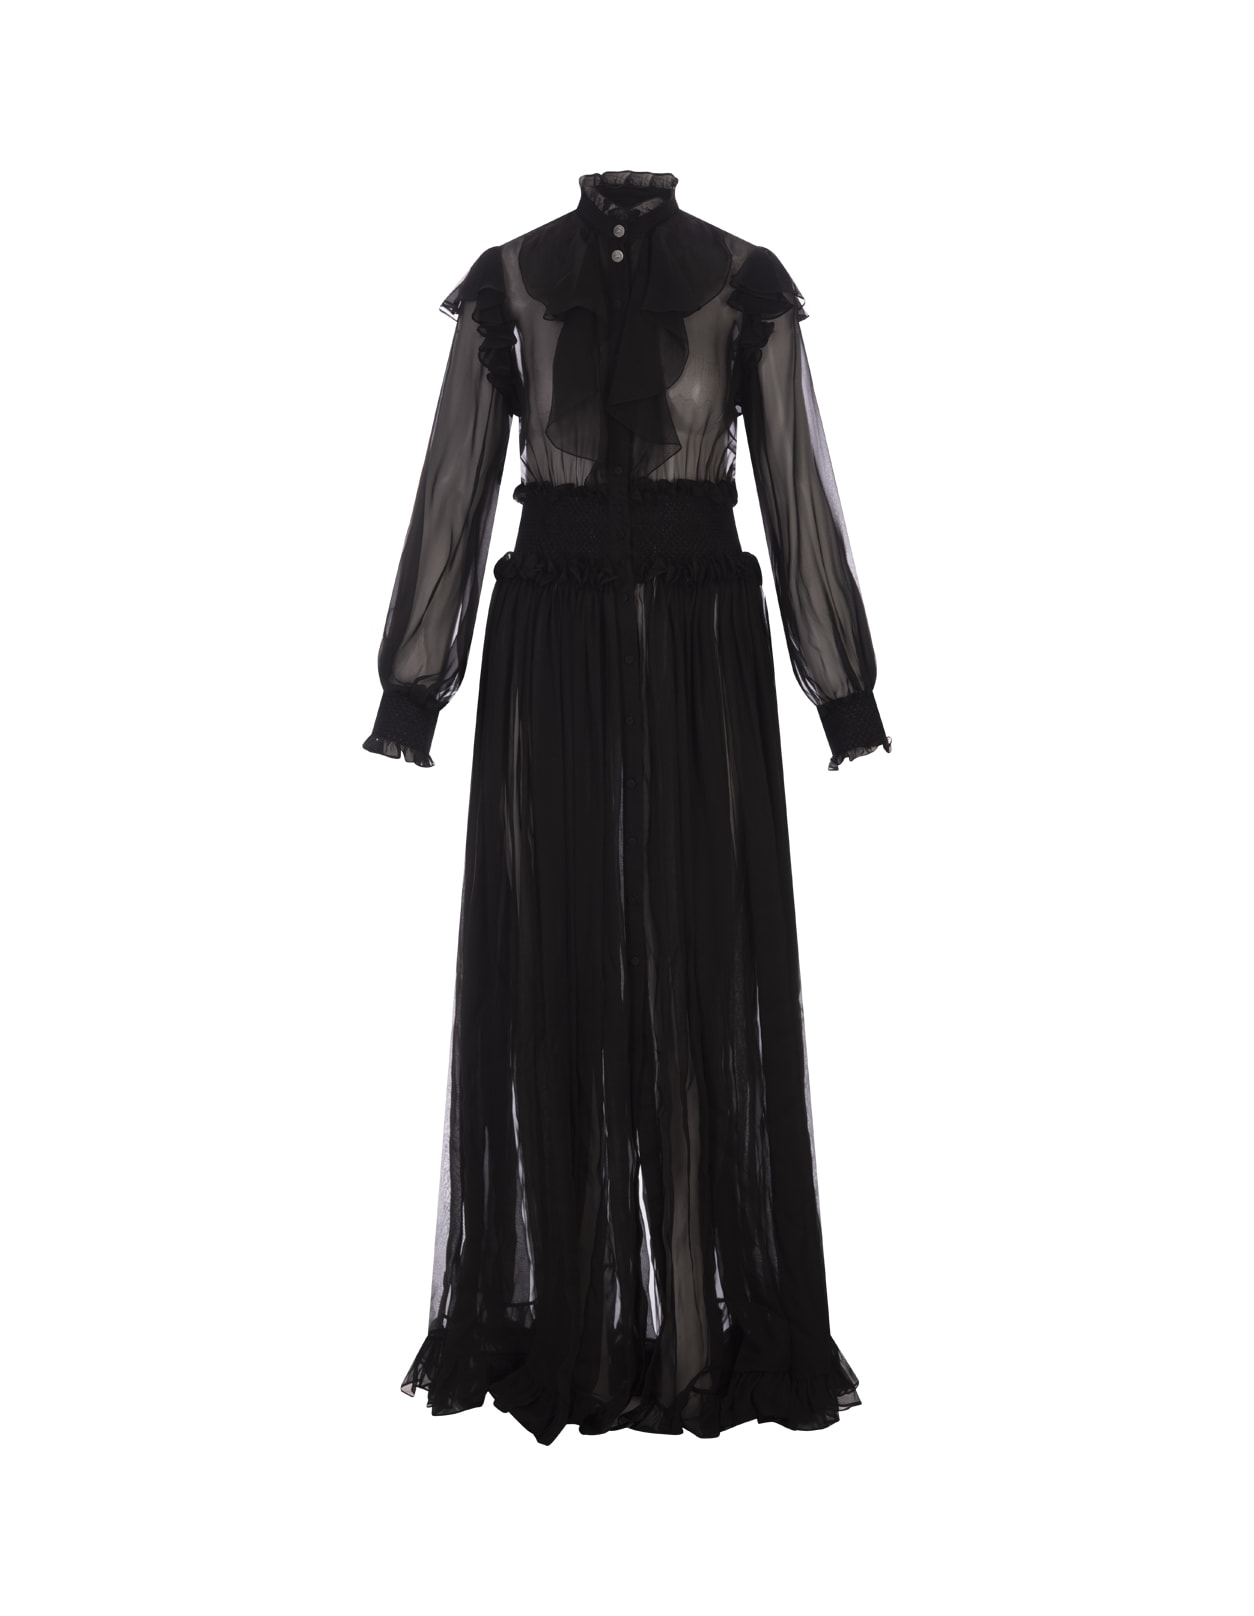 Black Long Dress With Ruffles